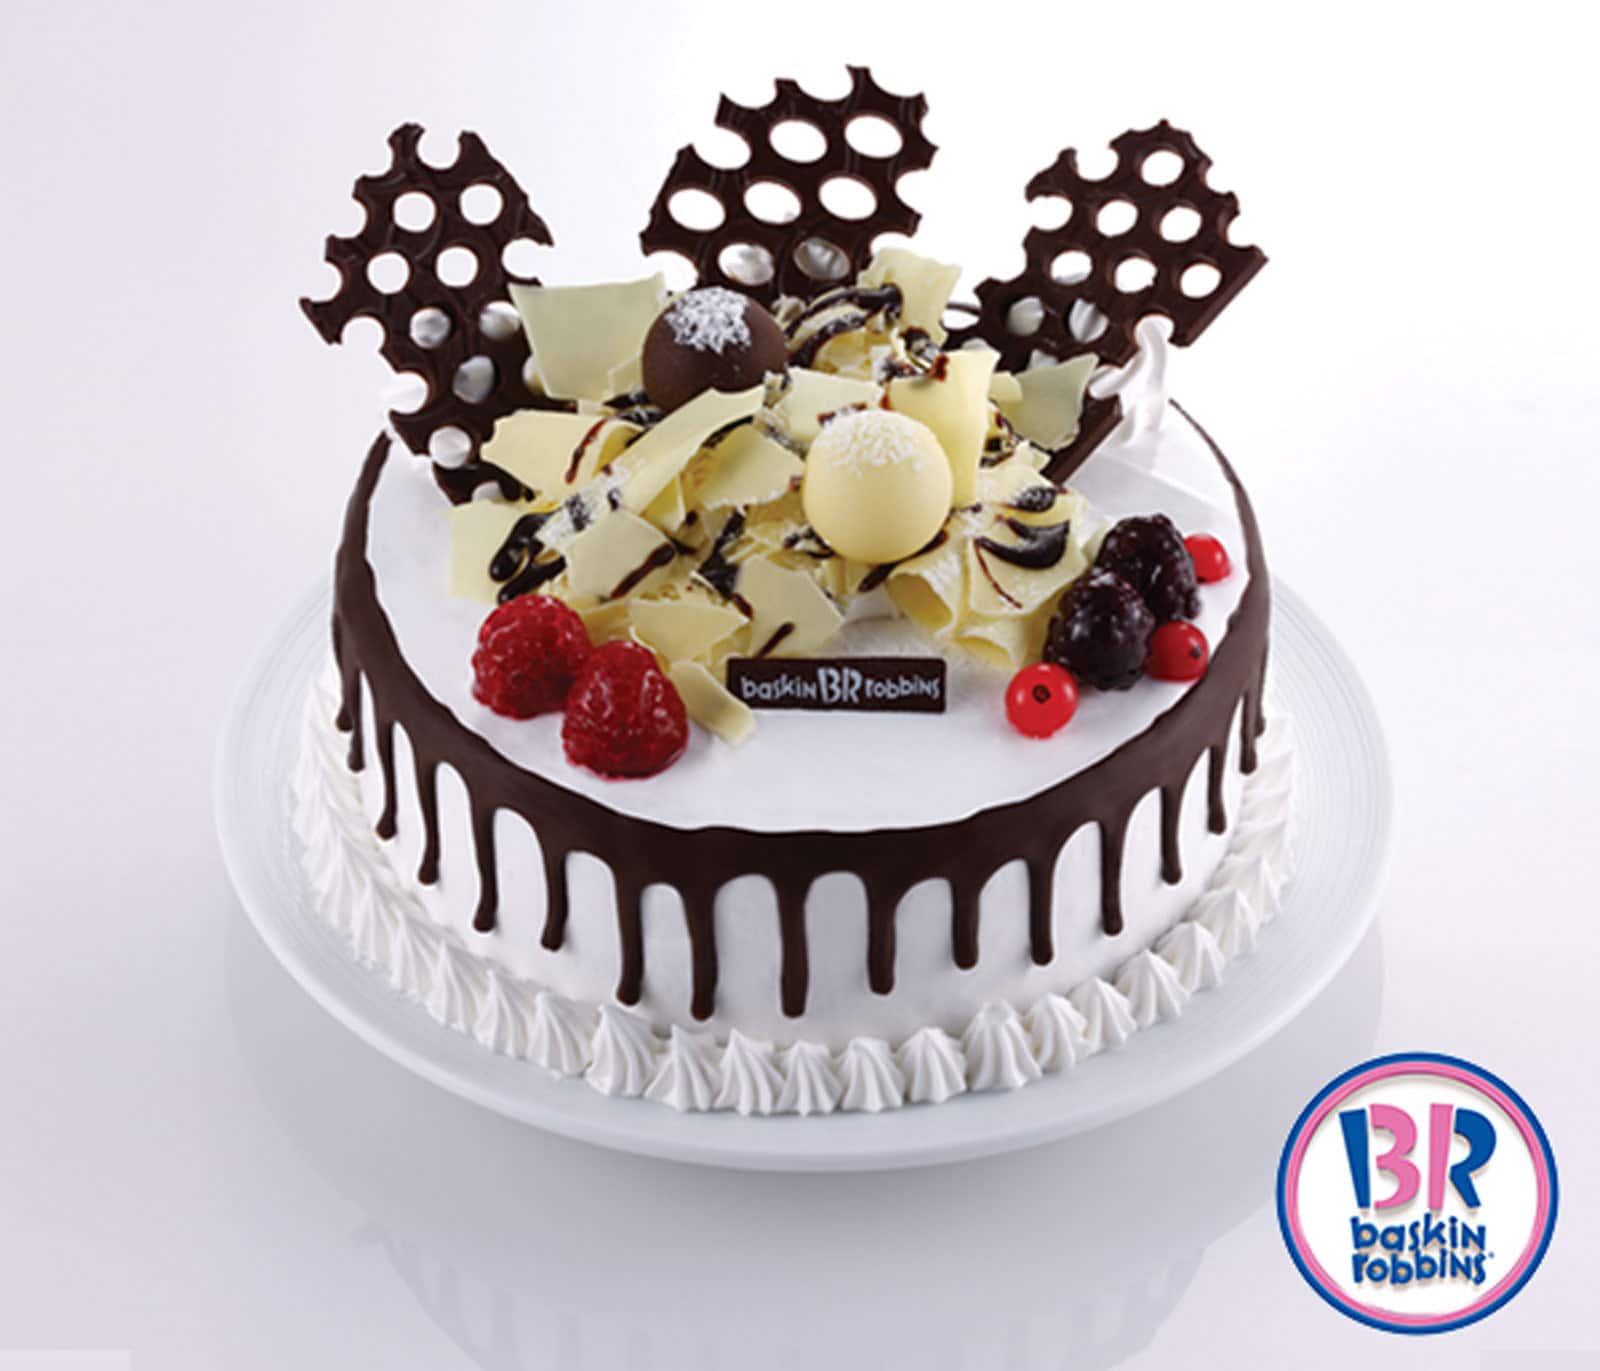 Baskin Robbins joins celebrations - News | Khaleej Times